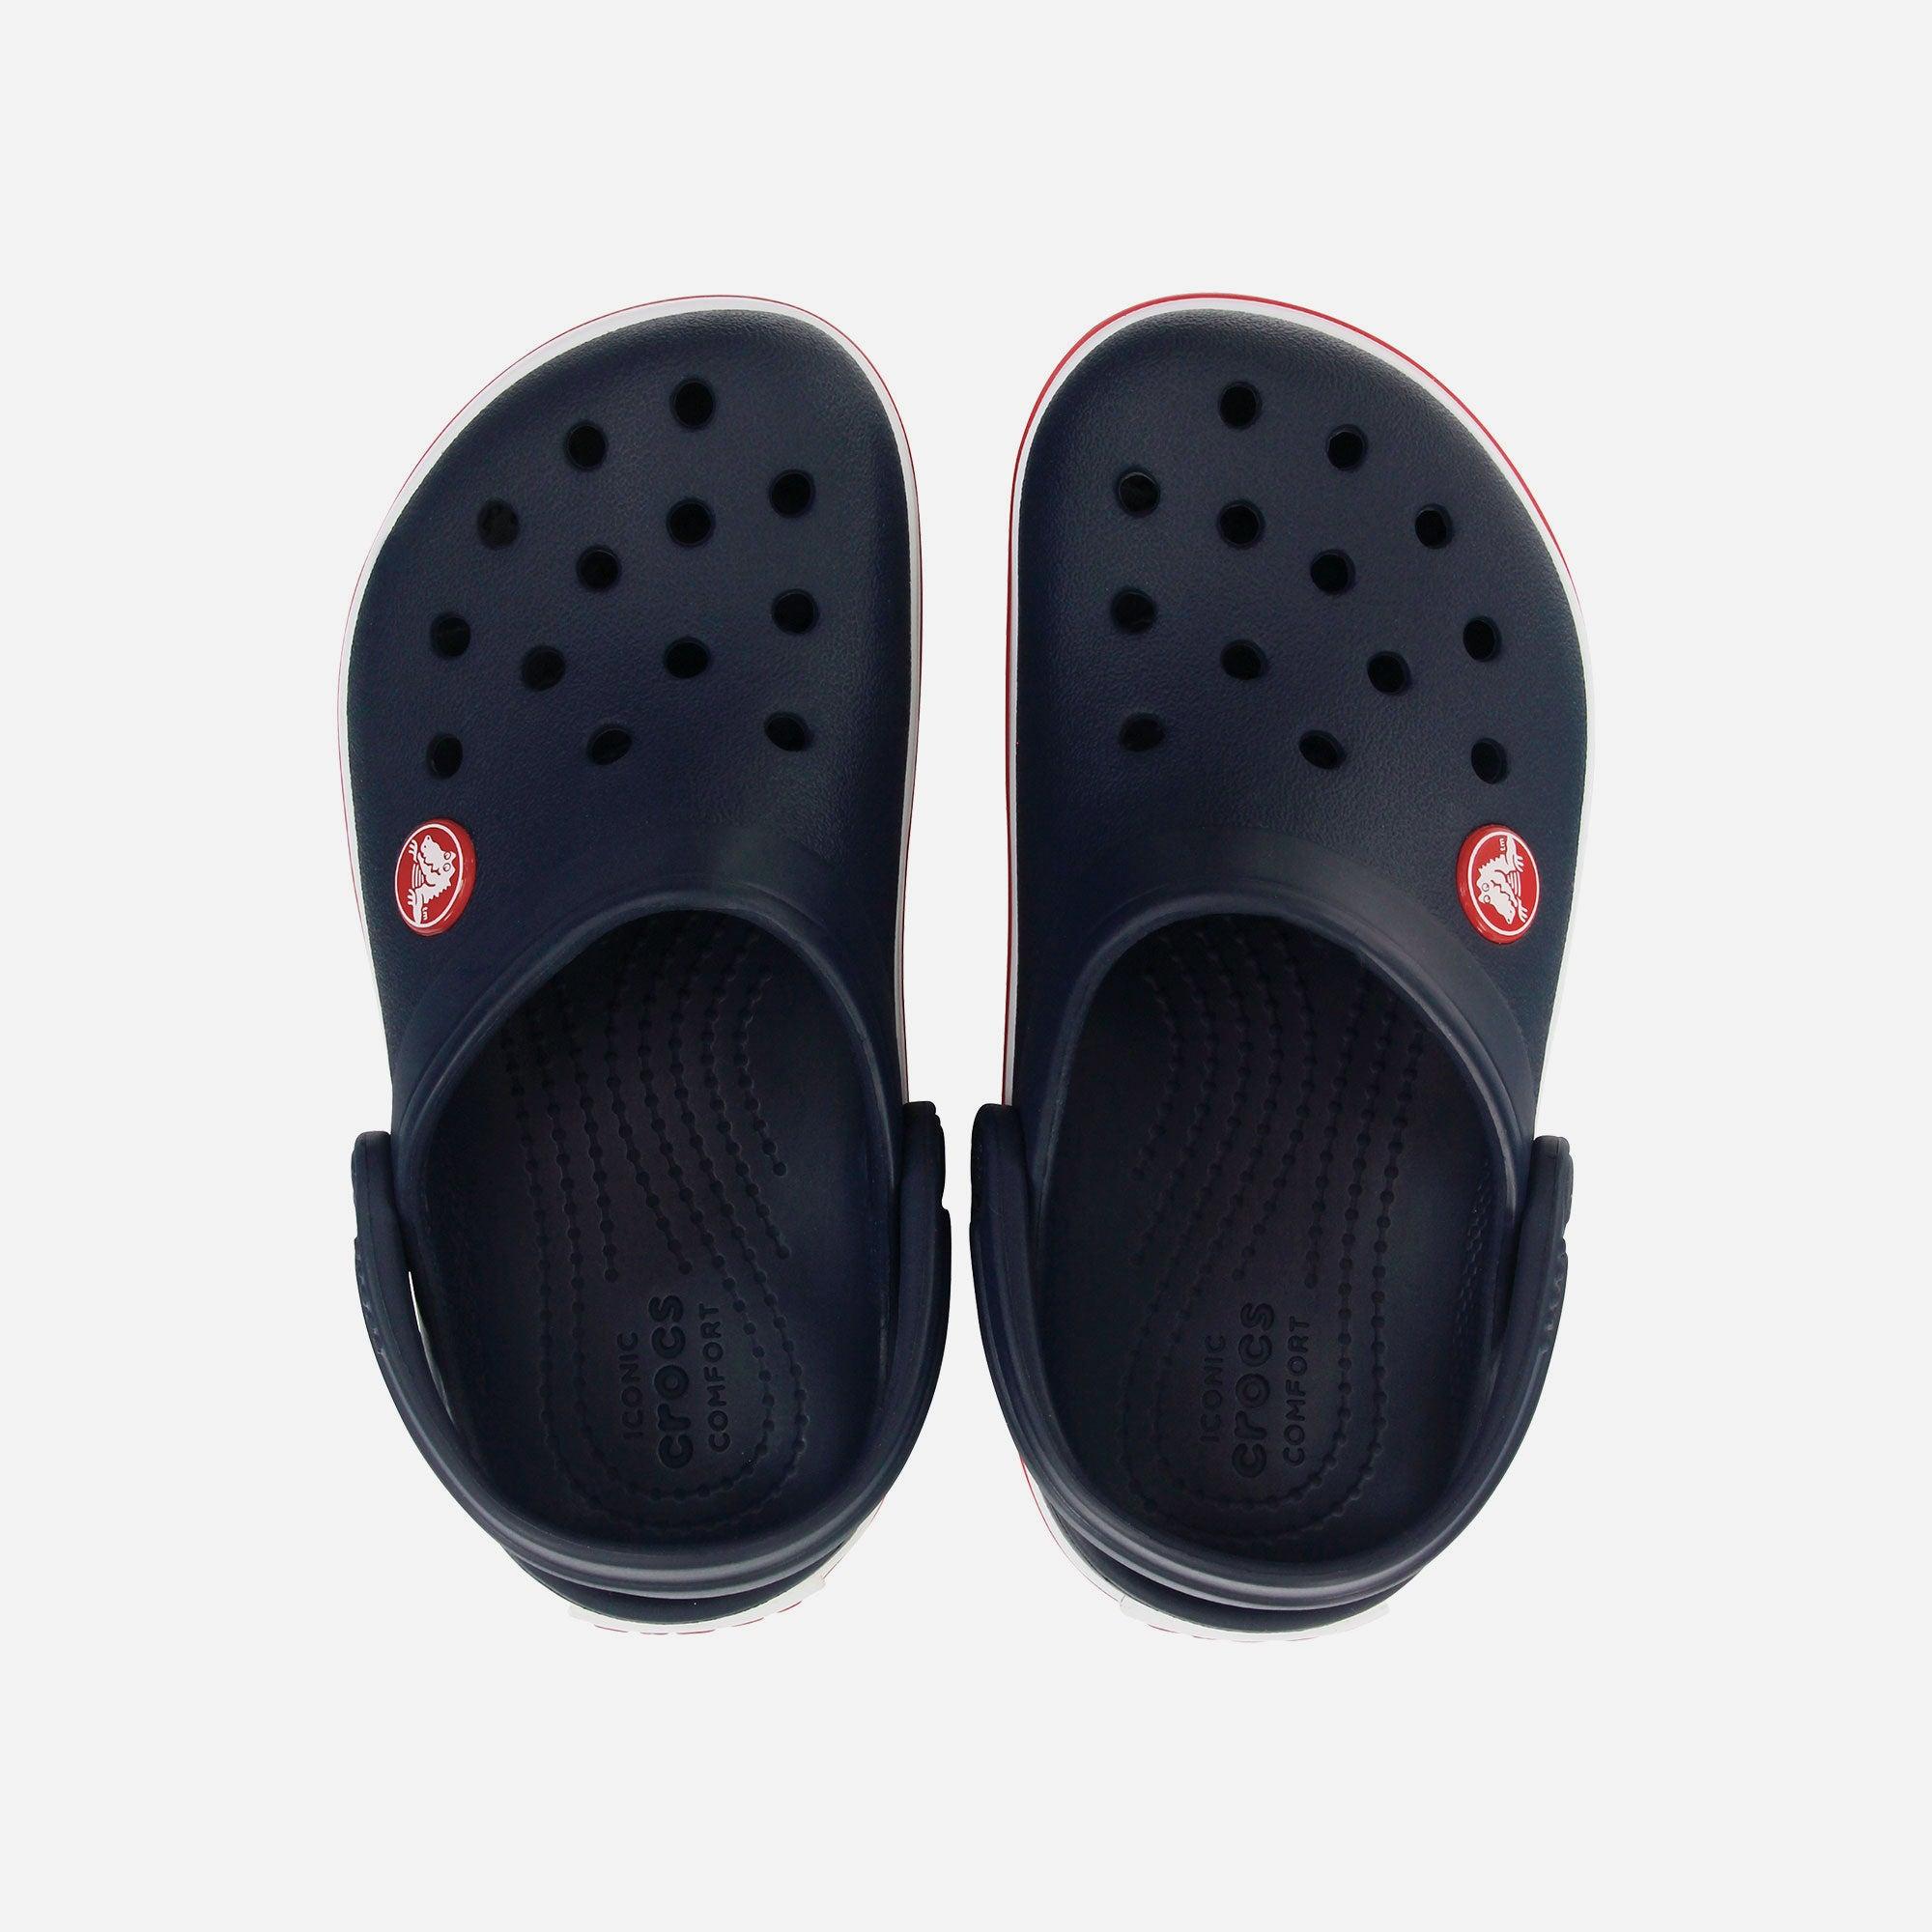 Giày nhựa trẻ em Crocs Crocband - 207006-485